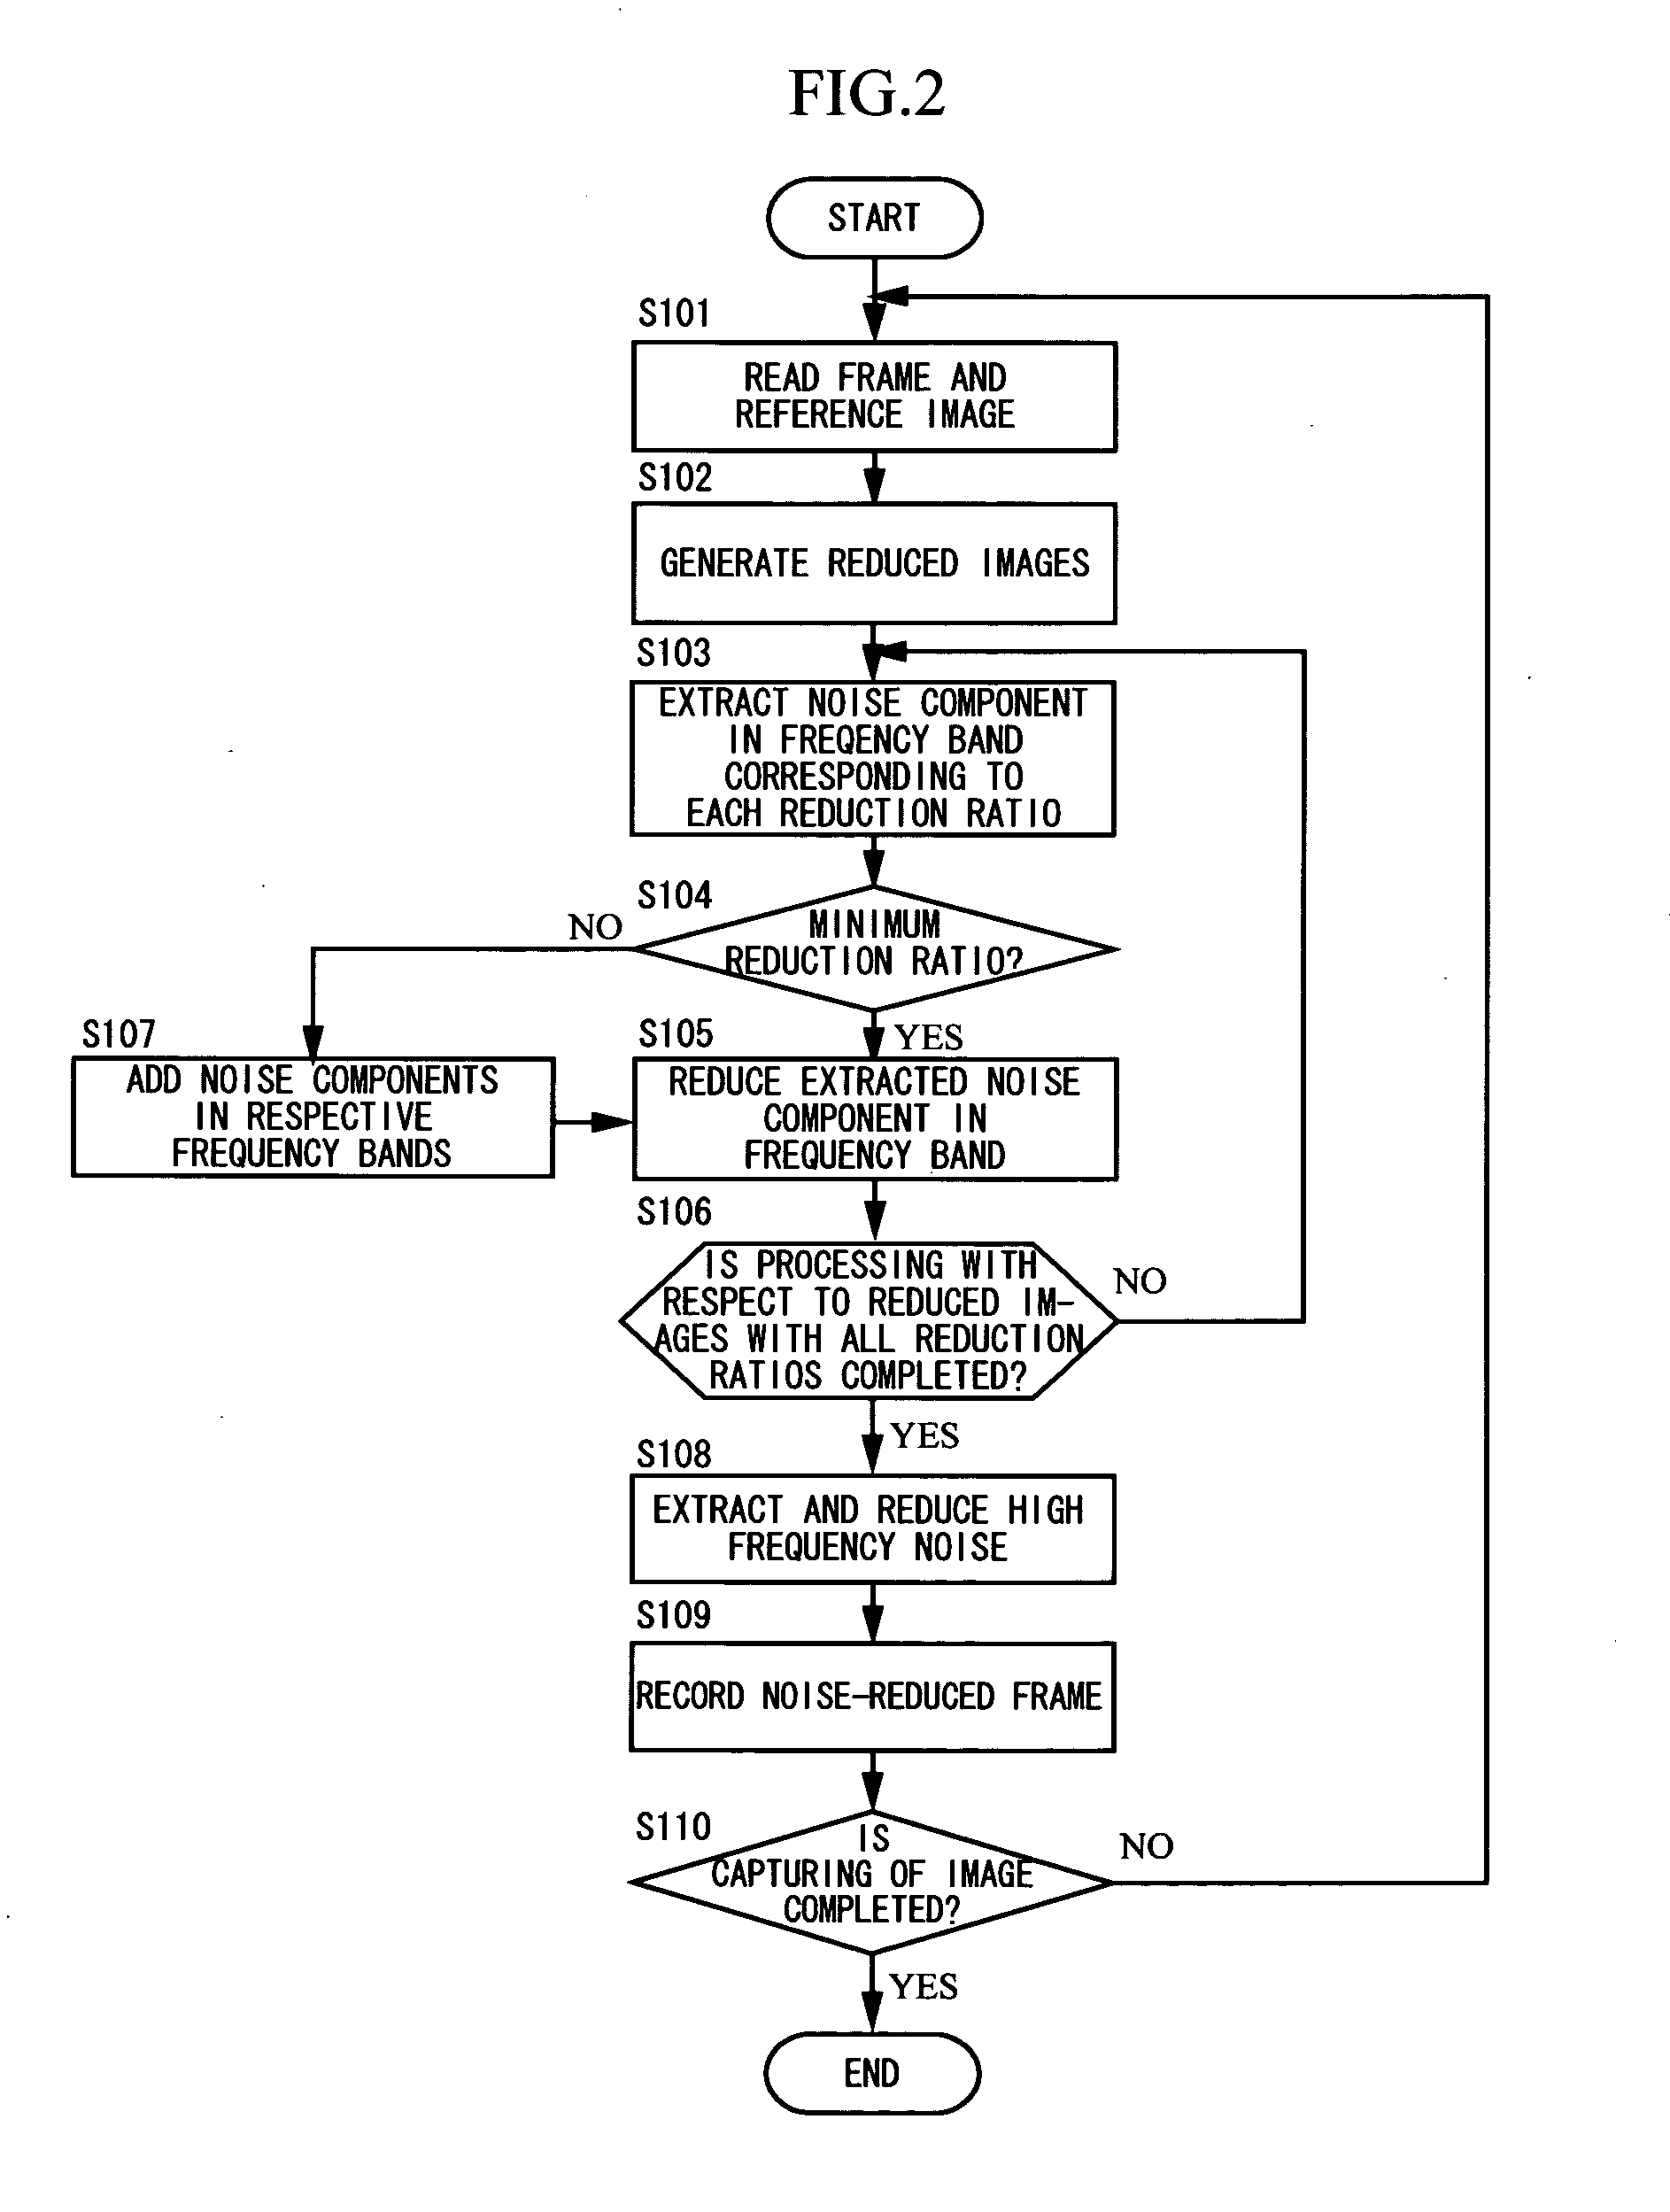 Image processing apparatus, imaging apparatus, and computer readable medium